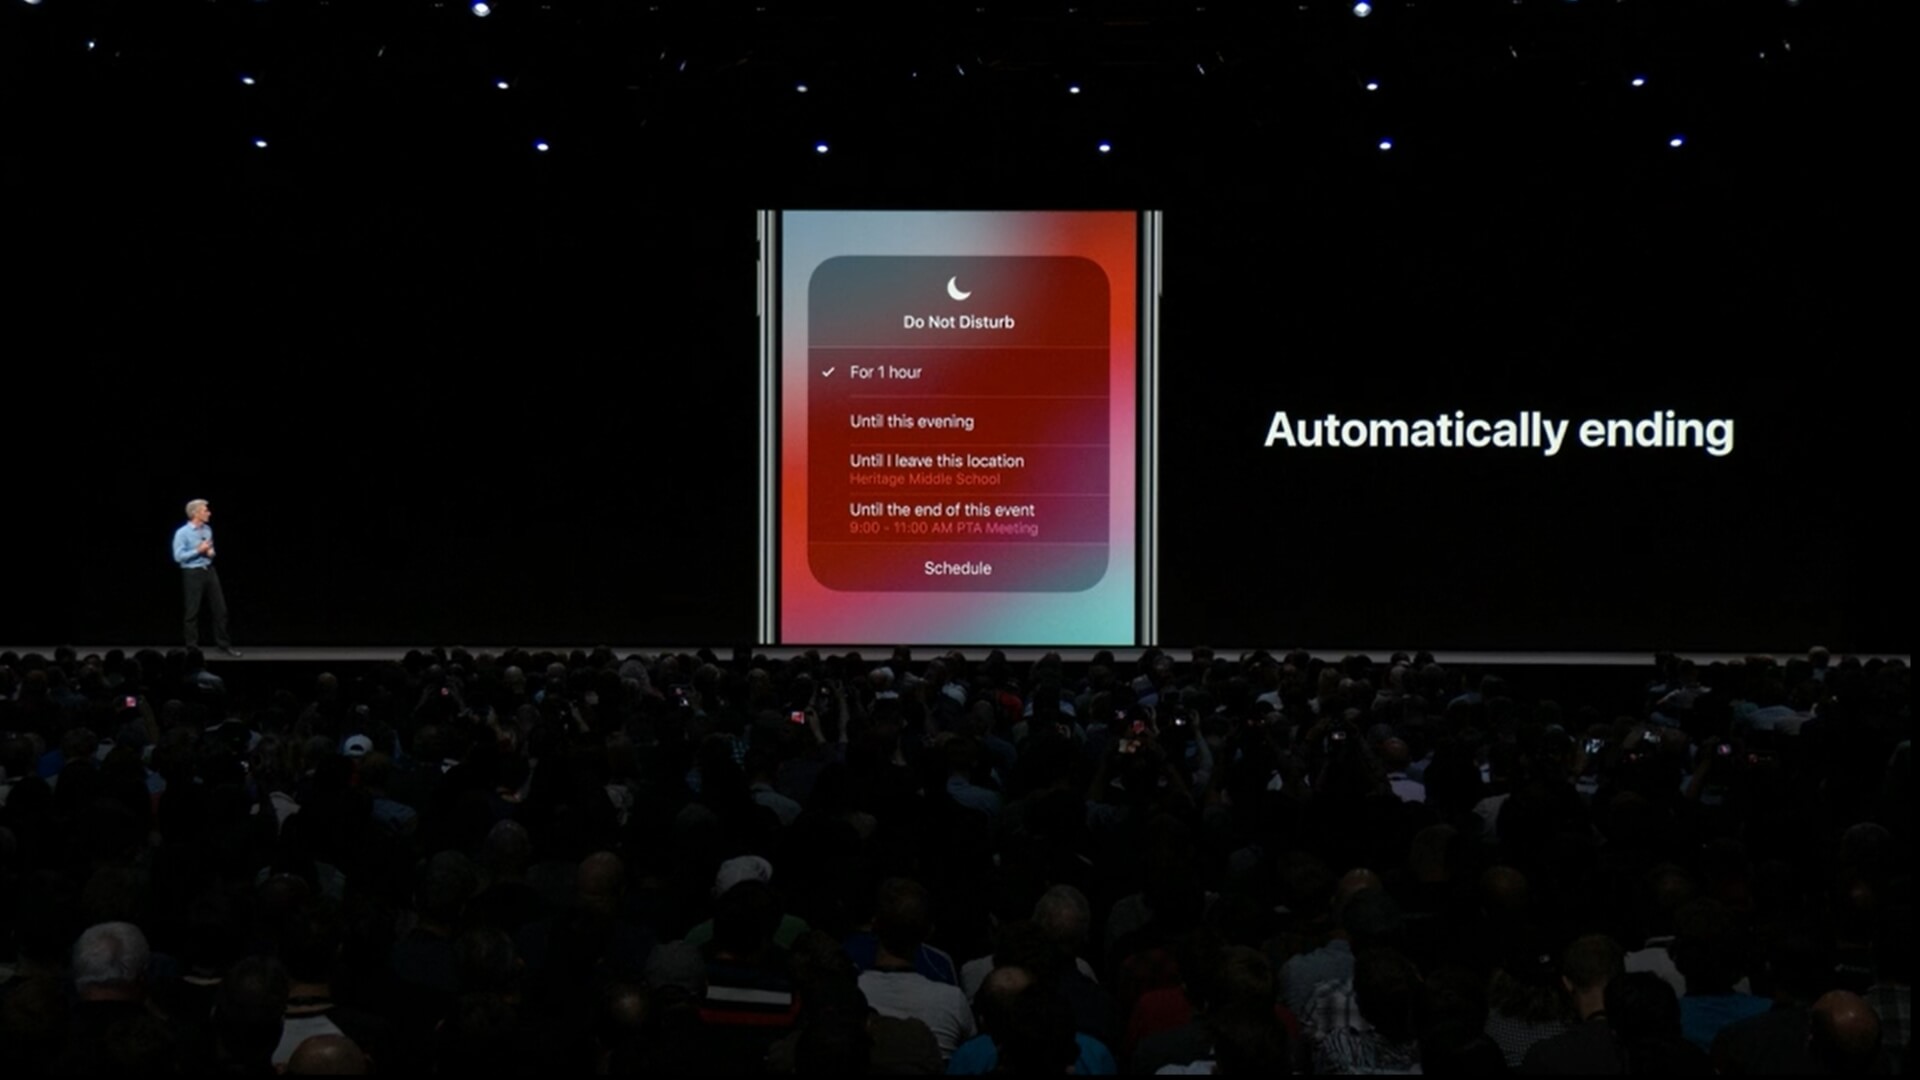 iOS 12 Automatically ending